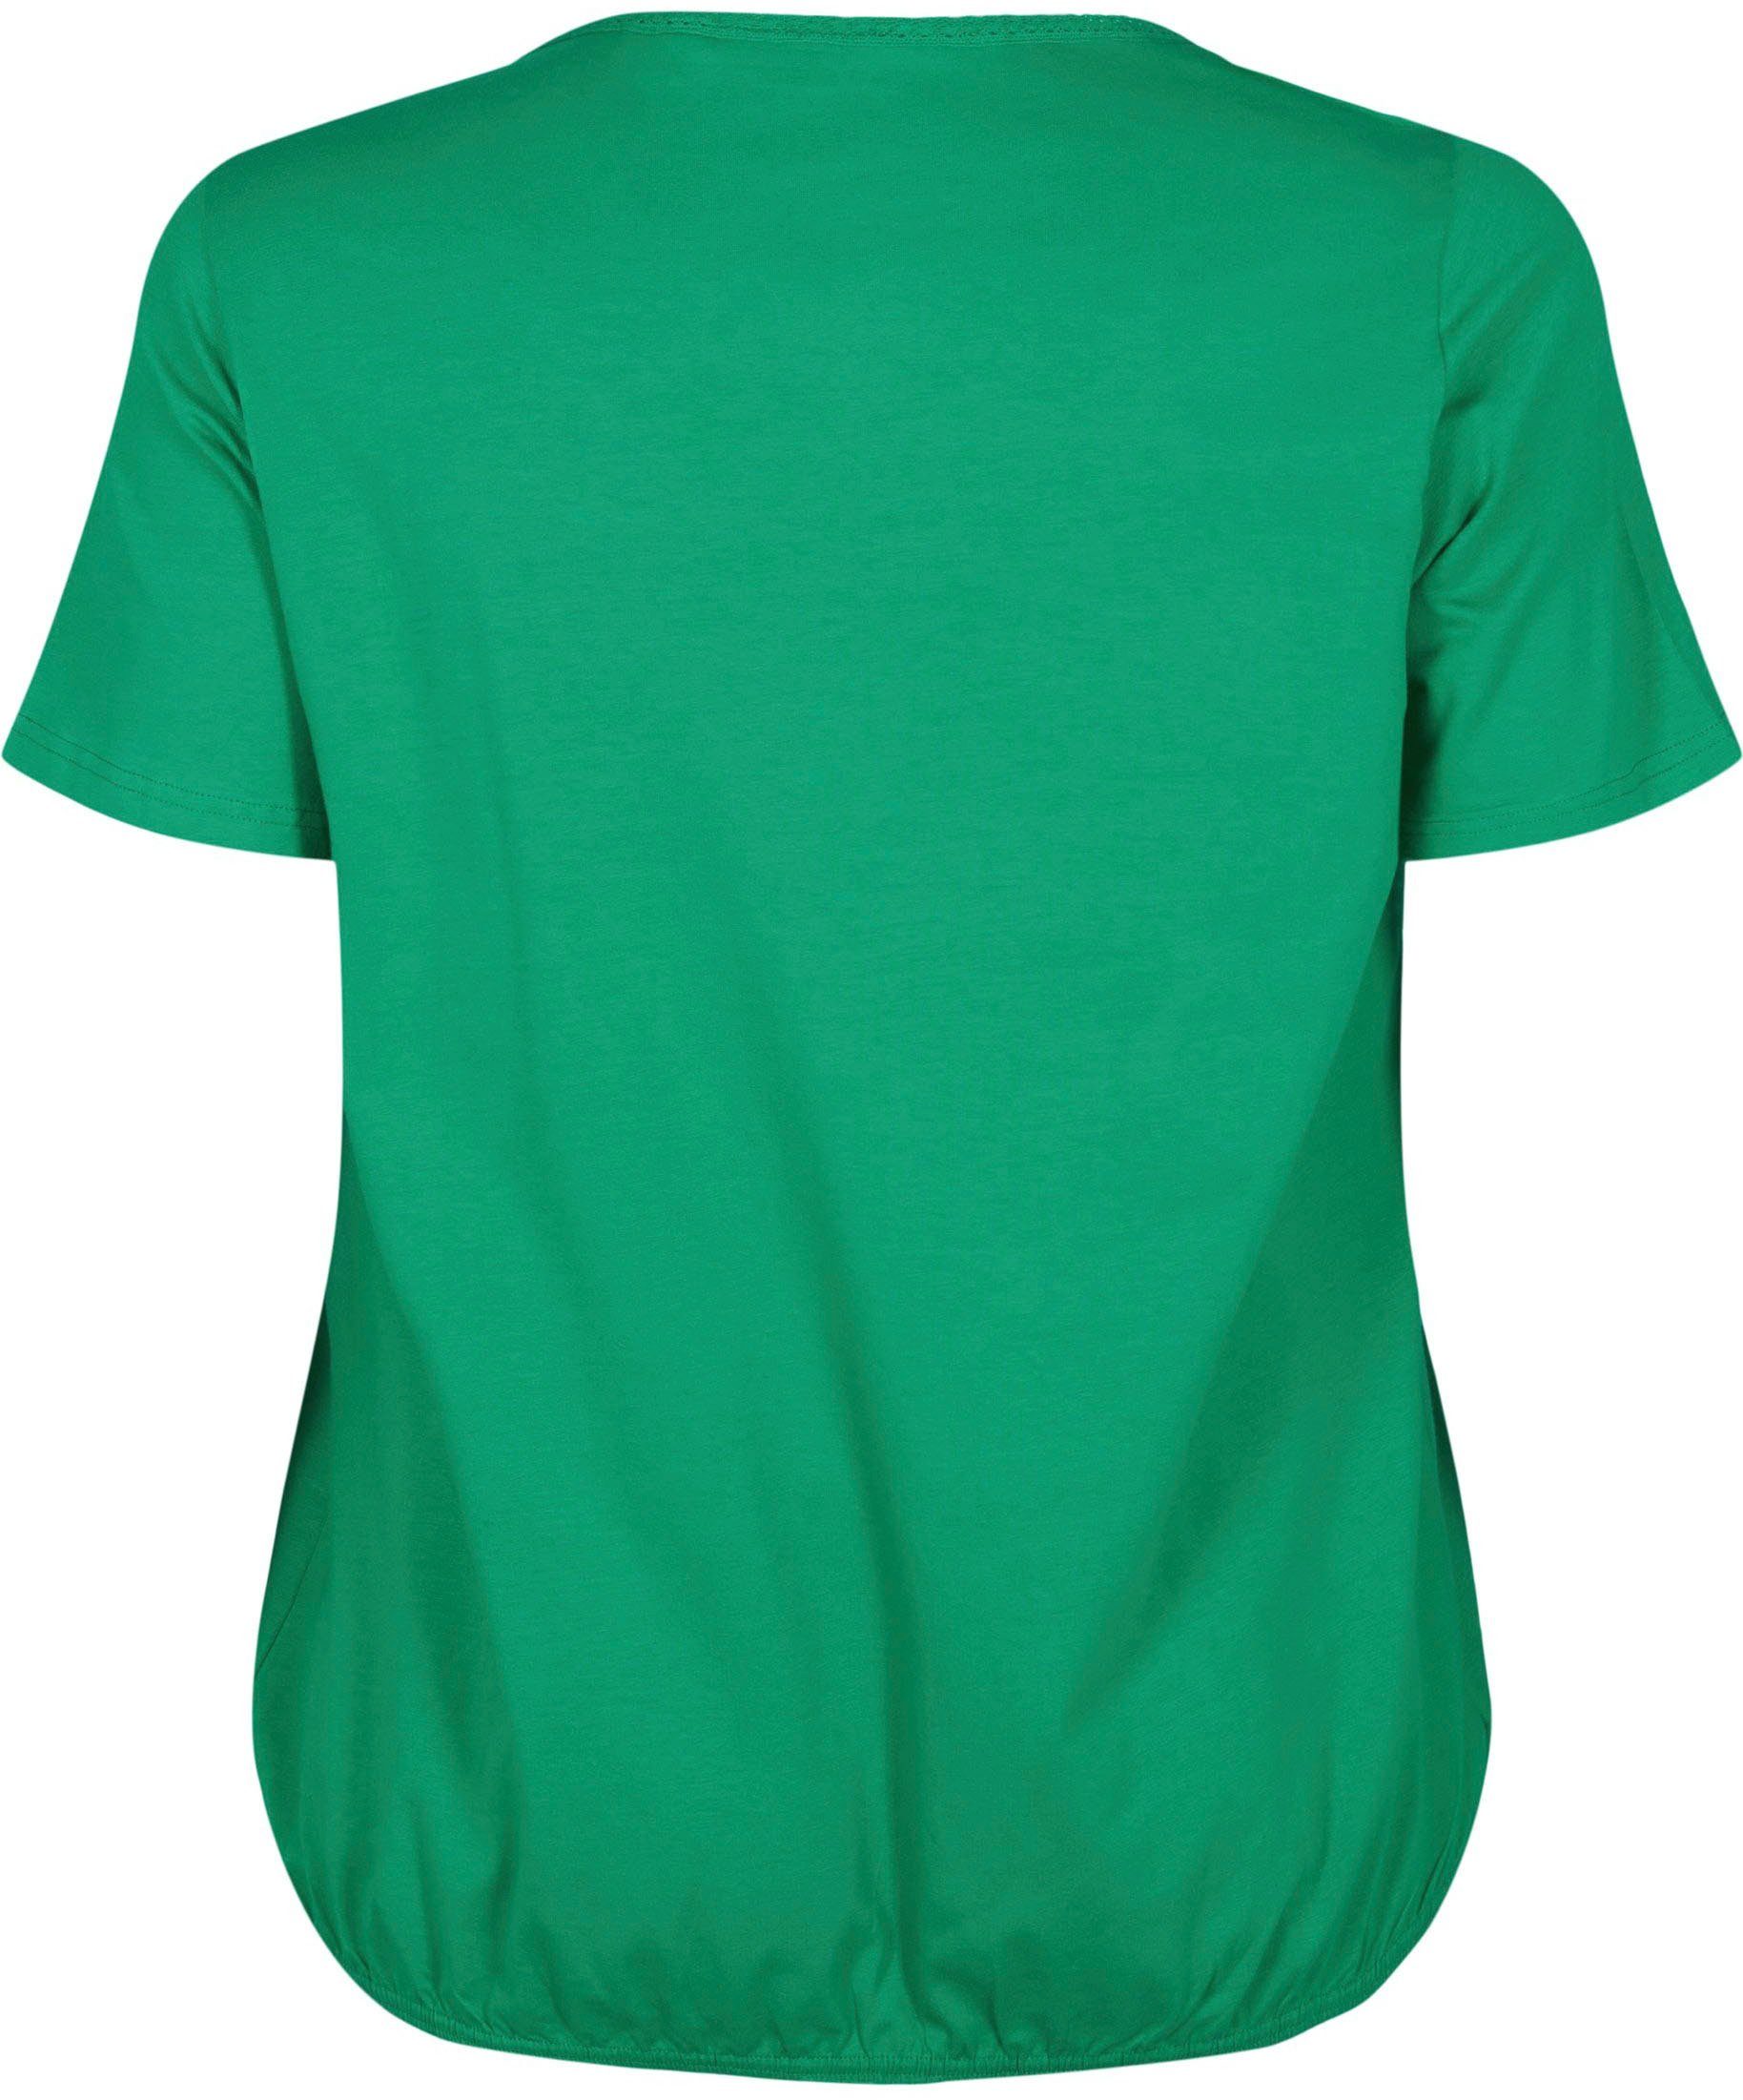 Zizzi T-Shirt green VPOLLY Zizzi jolly